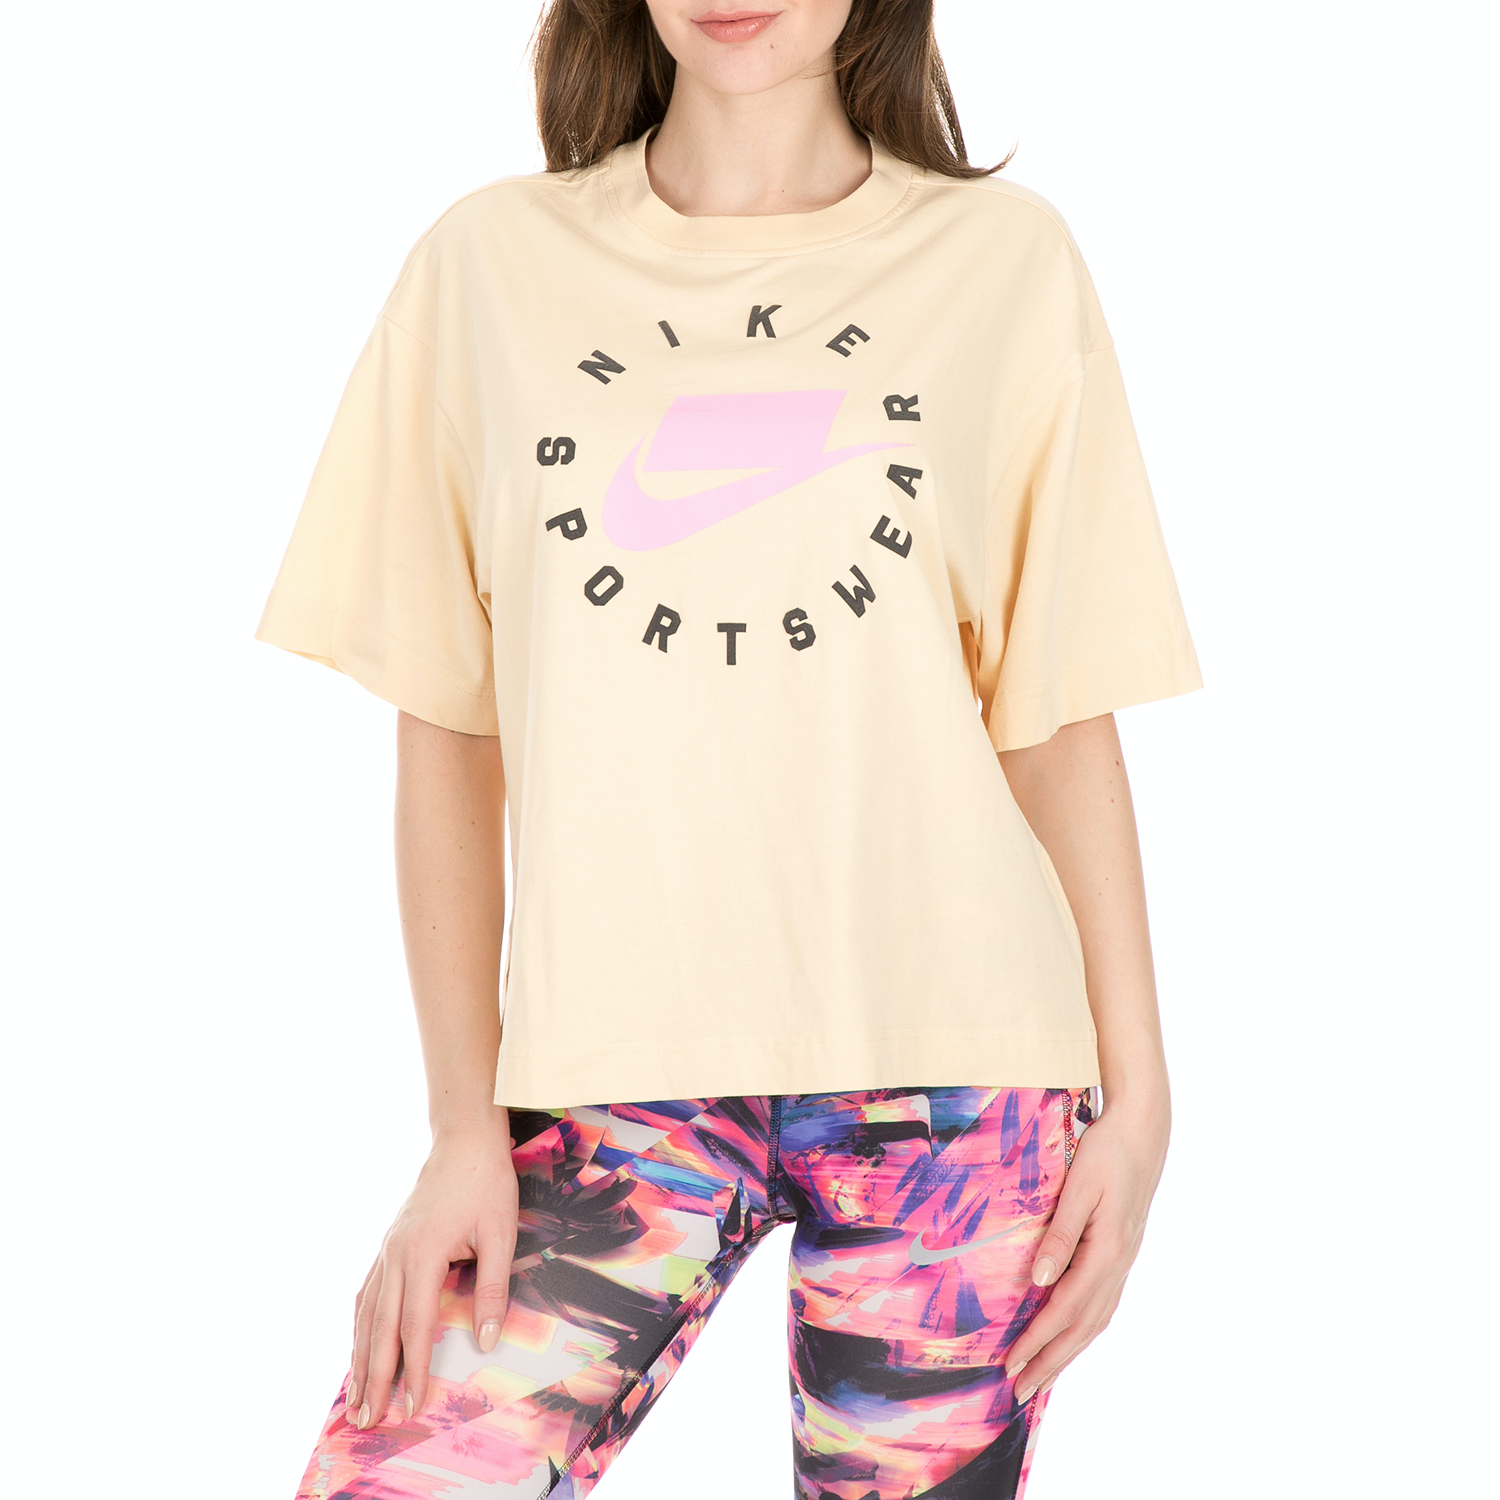 NIKE - Γυναικείο t-shirt NIKE SPORTSWEAR μπεζ Γυναικεία/Ρούχα/Αθλητικά/T-shirt-Τοπ